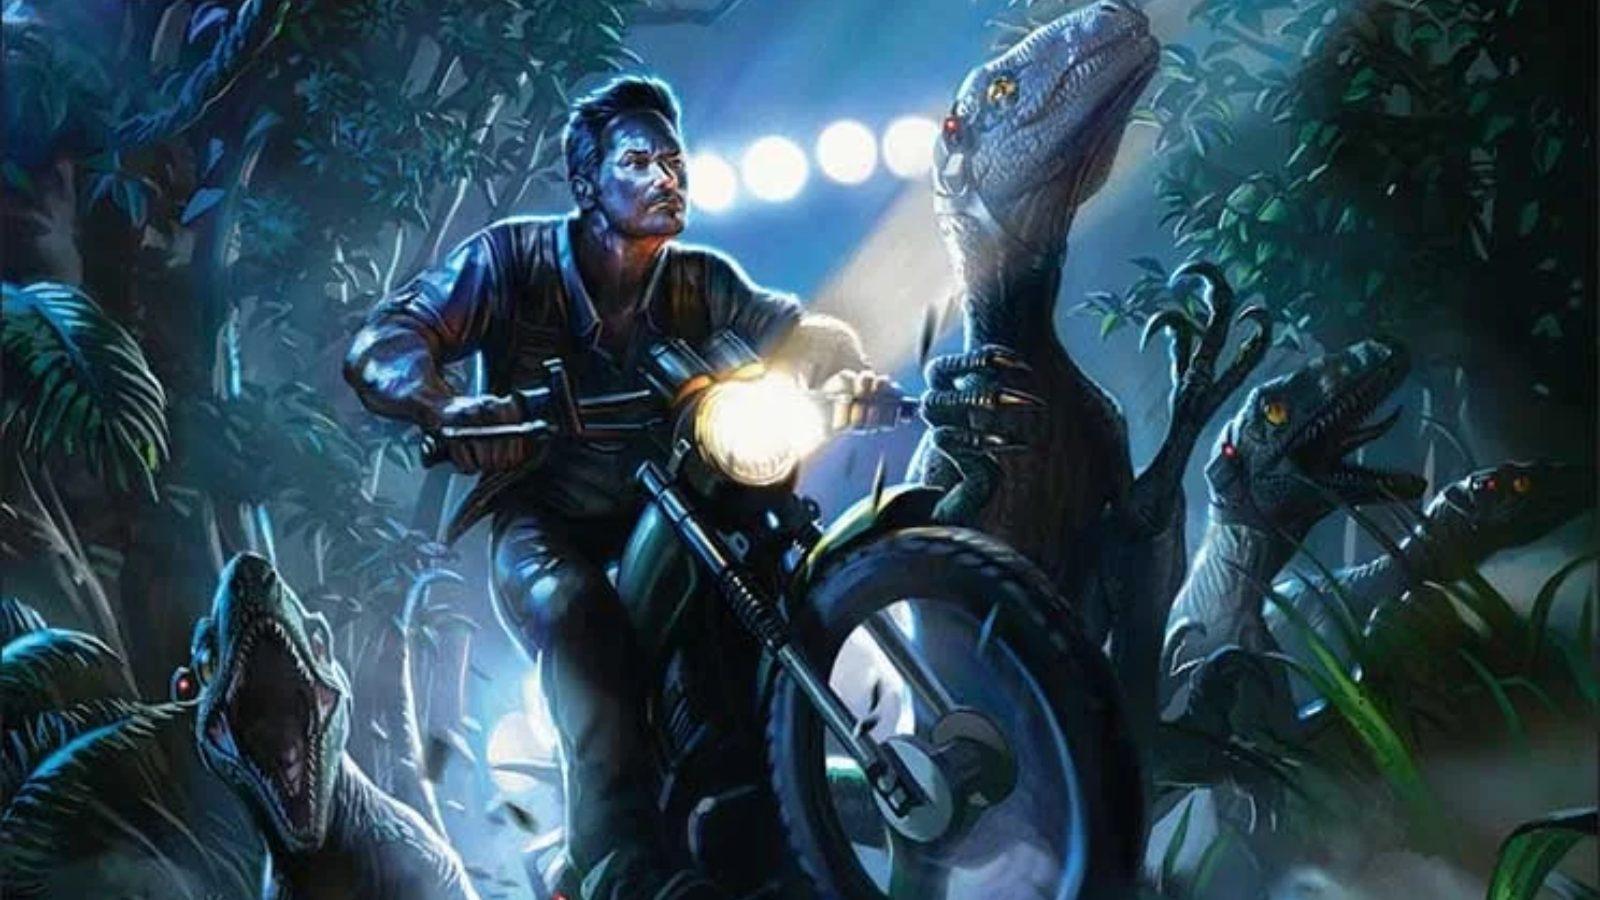 MTG Jurassic World Chris Pratt on Motorbike